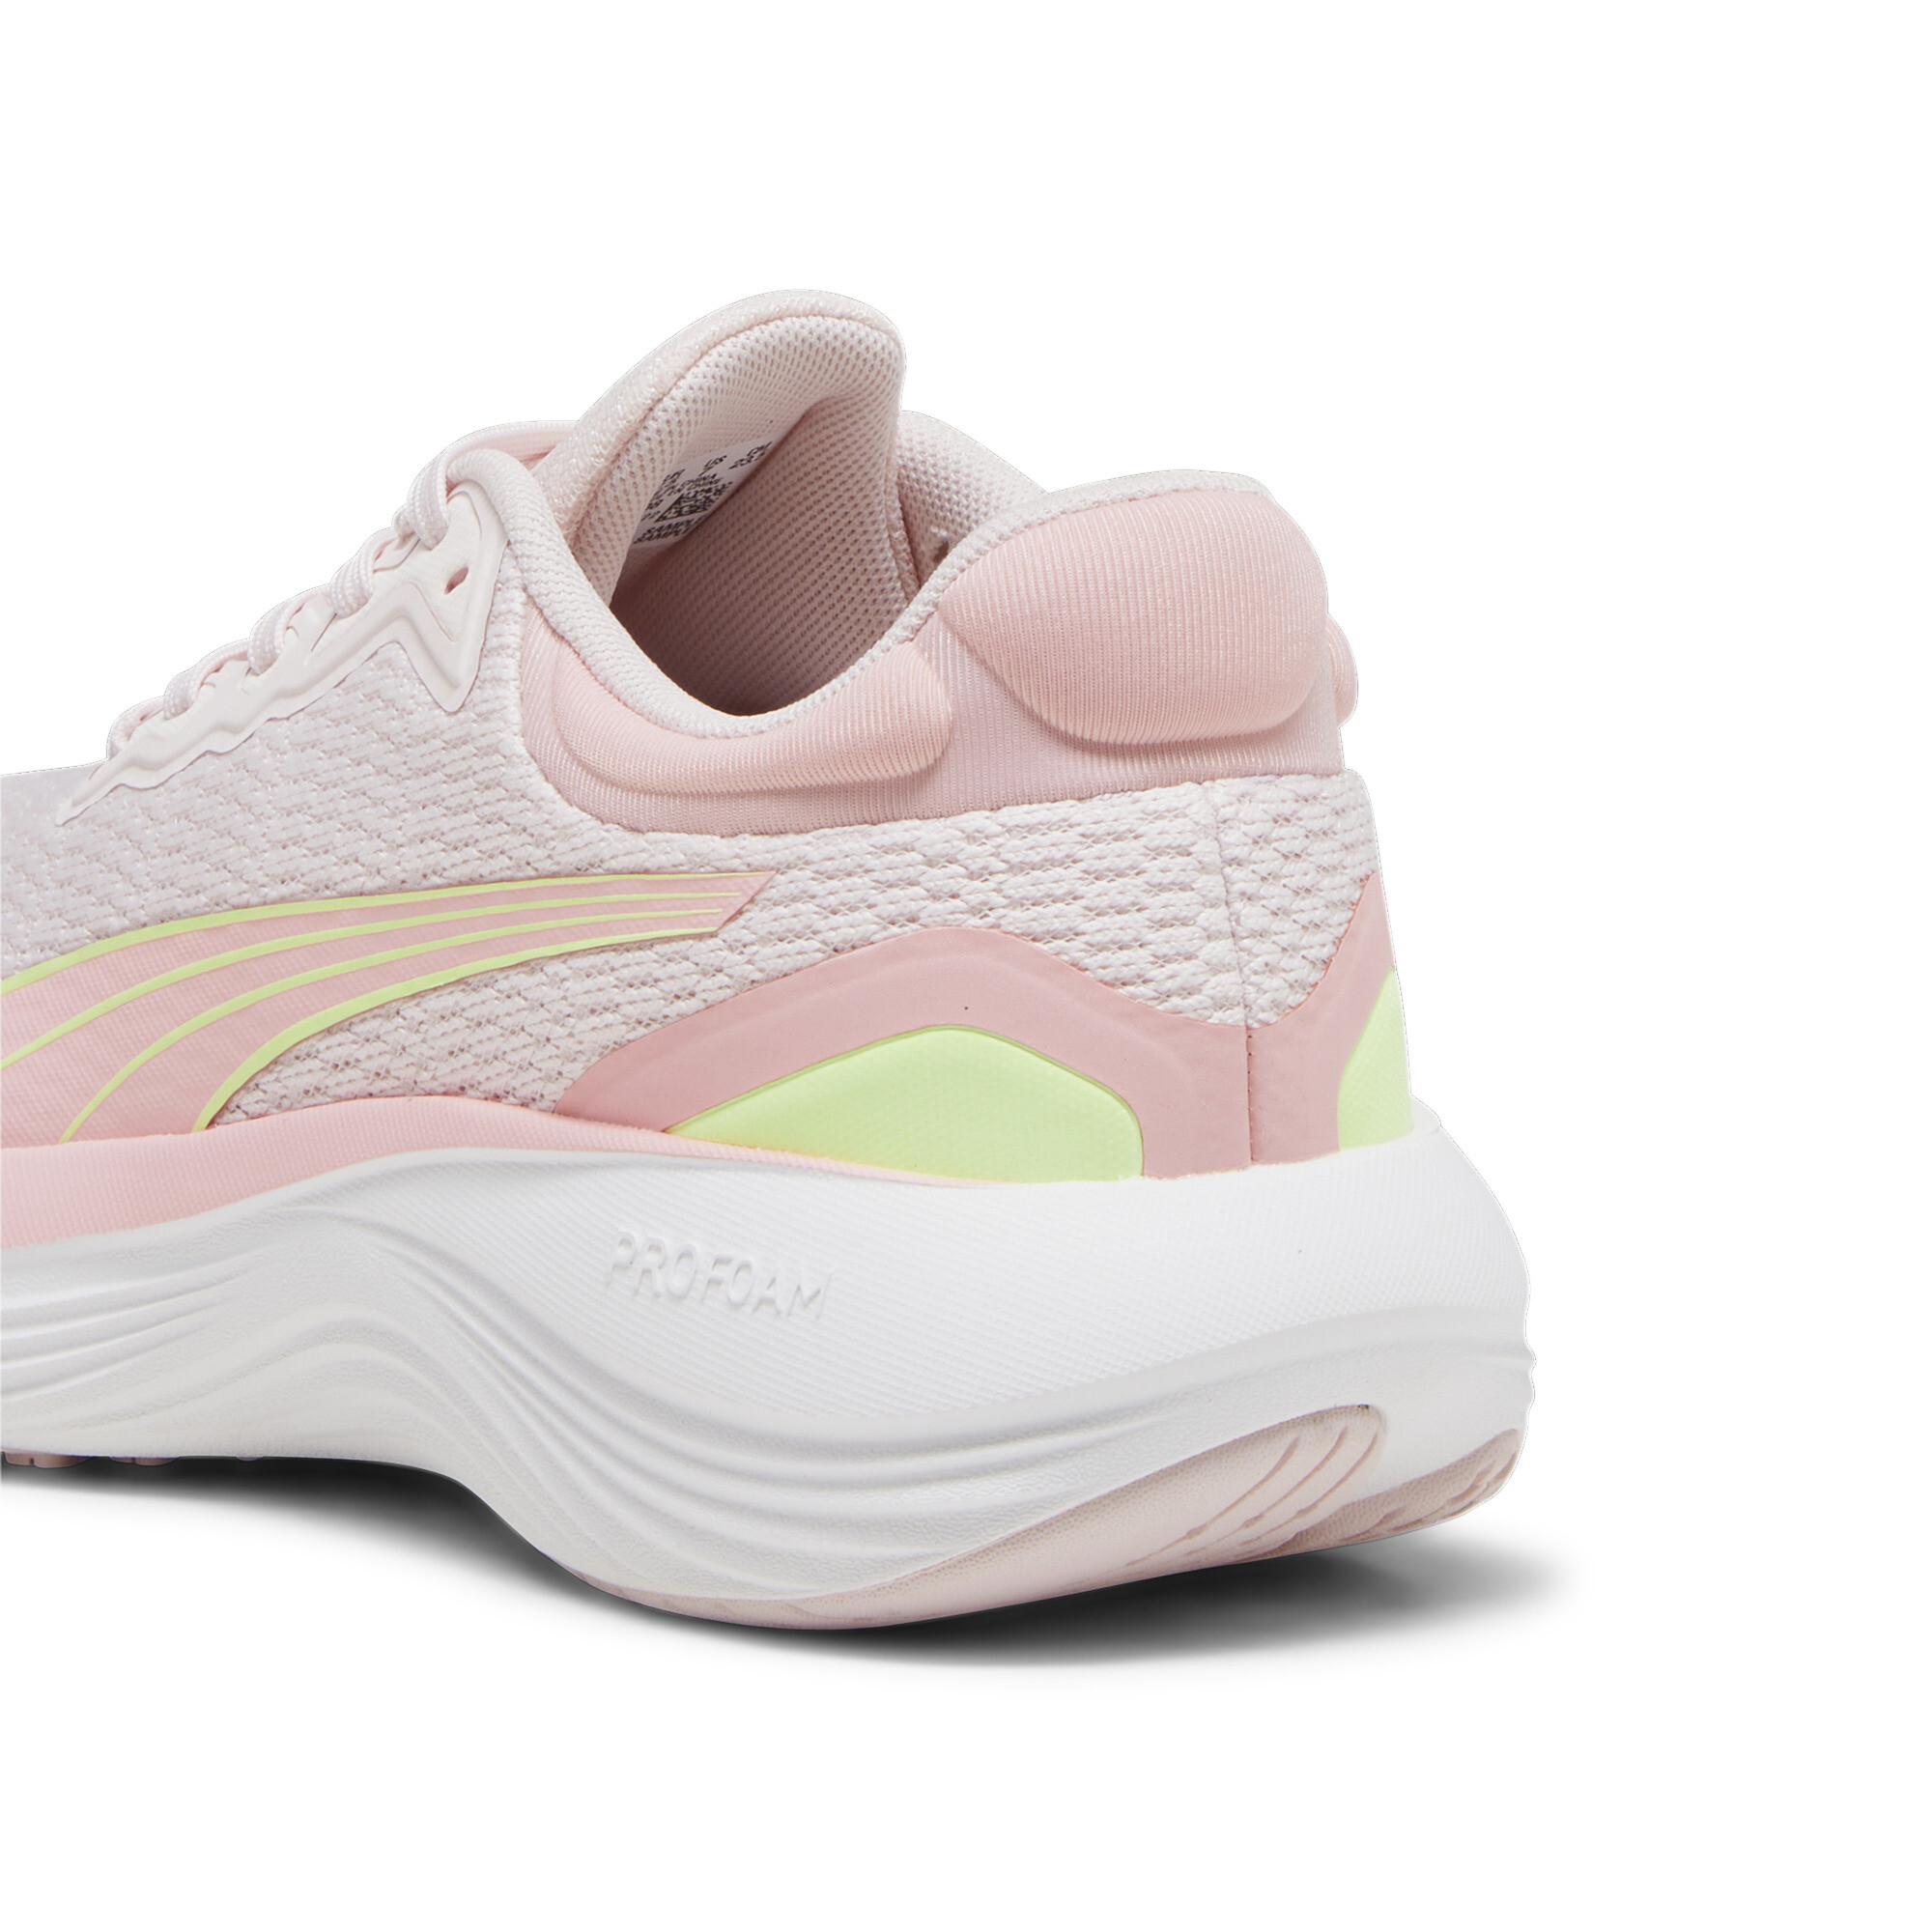 Men's PUMA Scend Pro Running Shoes In Pink, Size EU 46